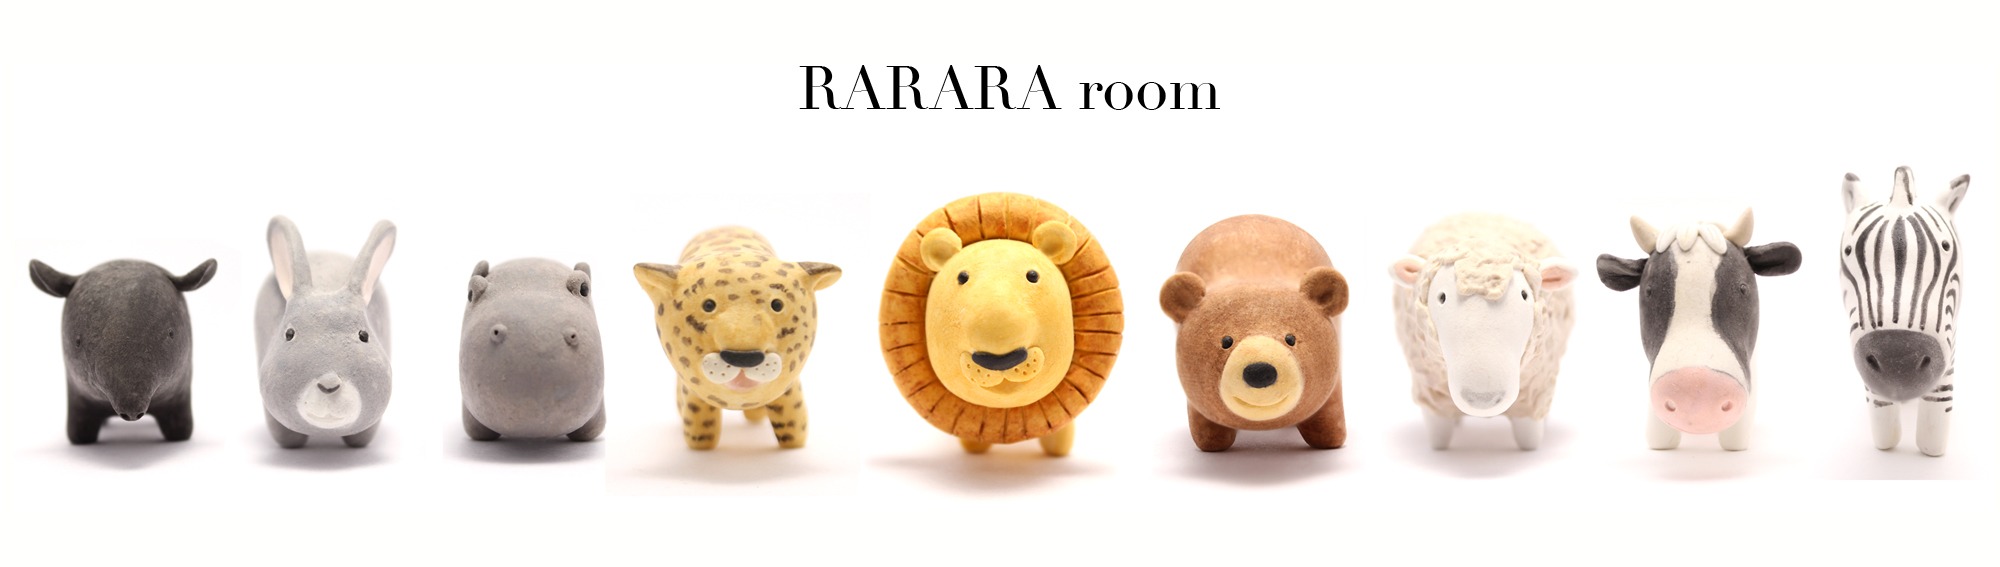 RaRaRa room